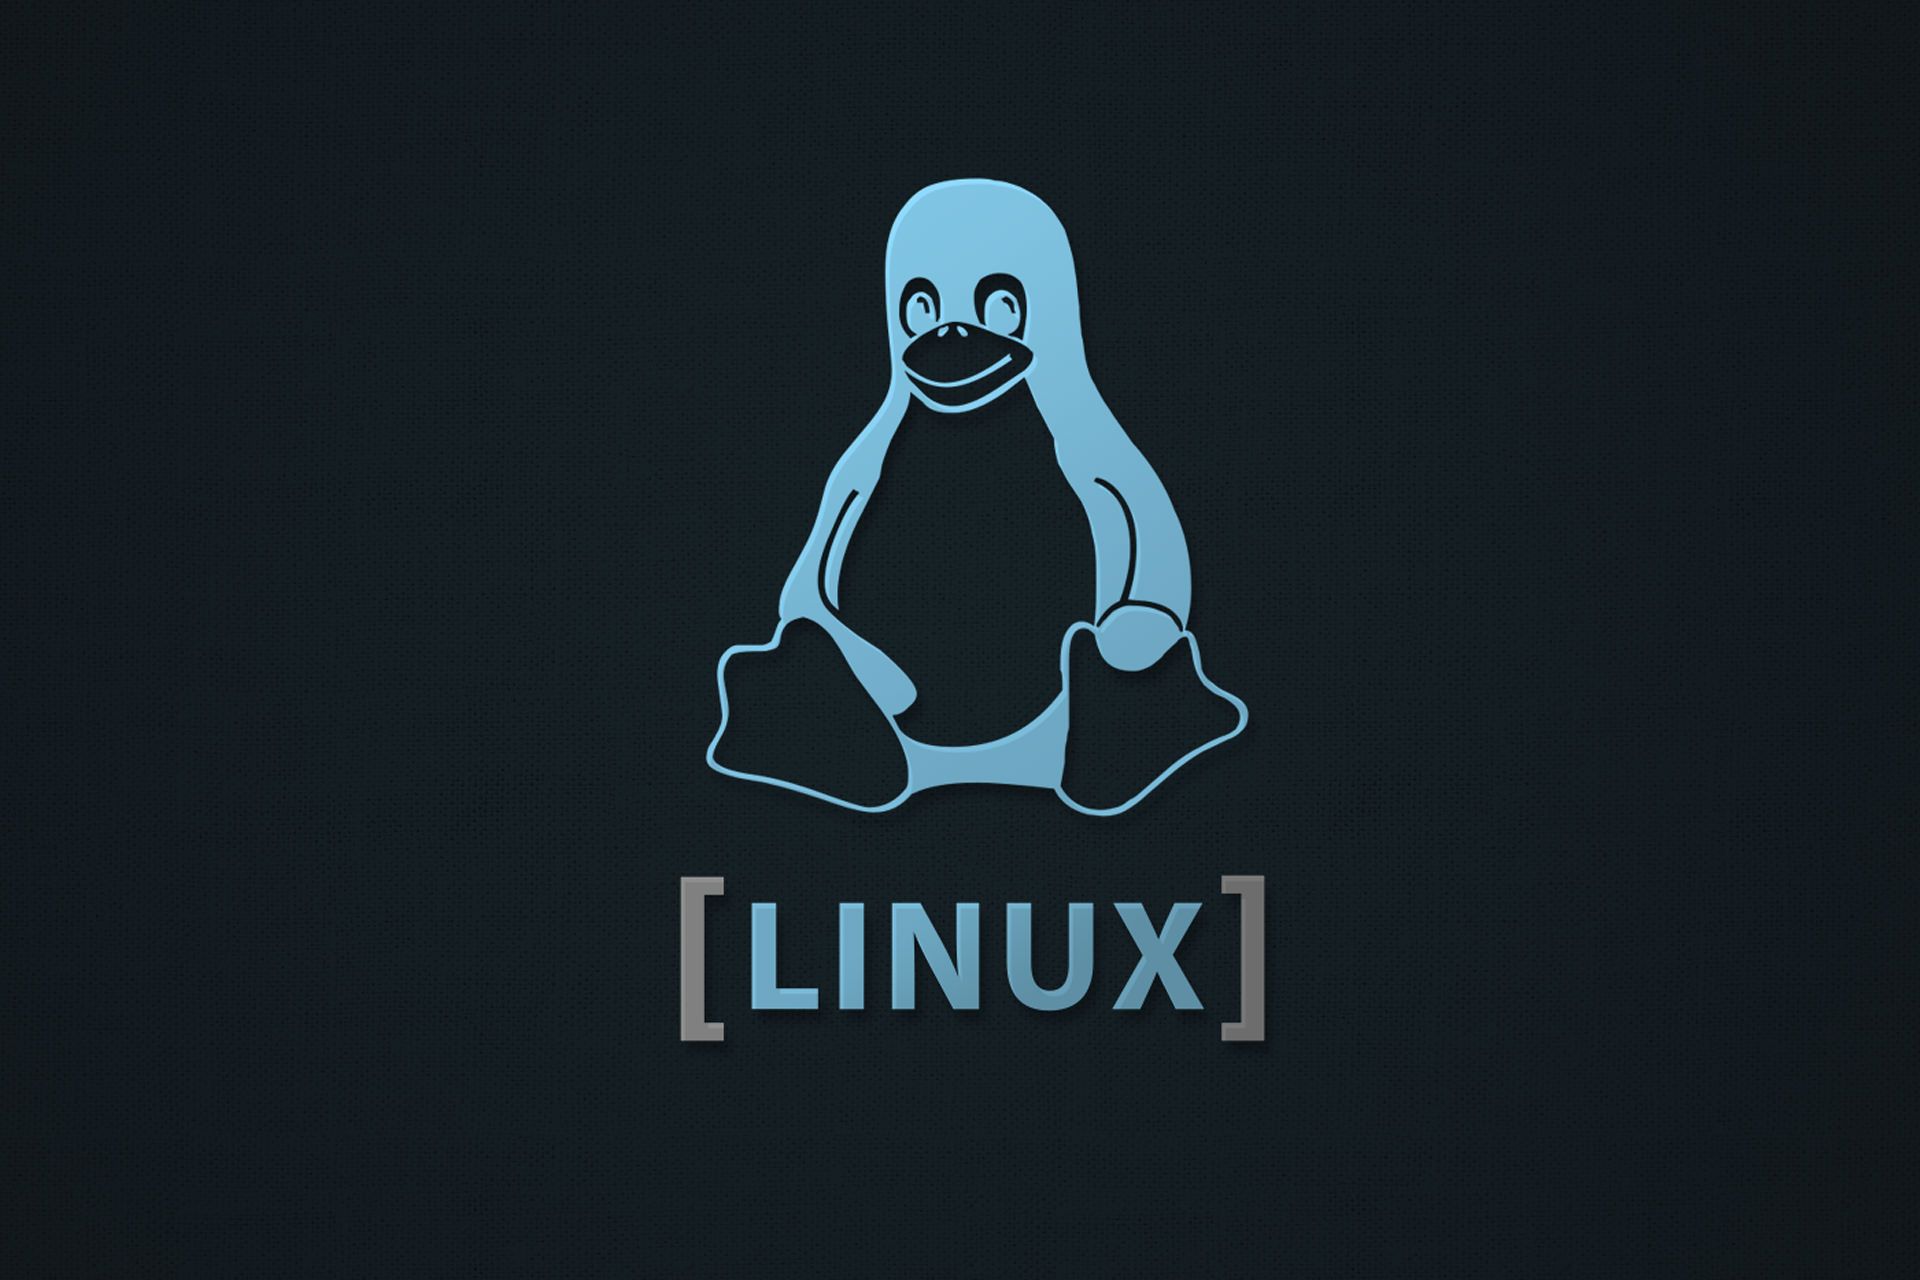 طرح گرافیکی تاکس / Tux مسکات لینوکس / Linux